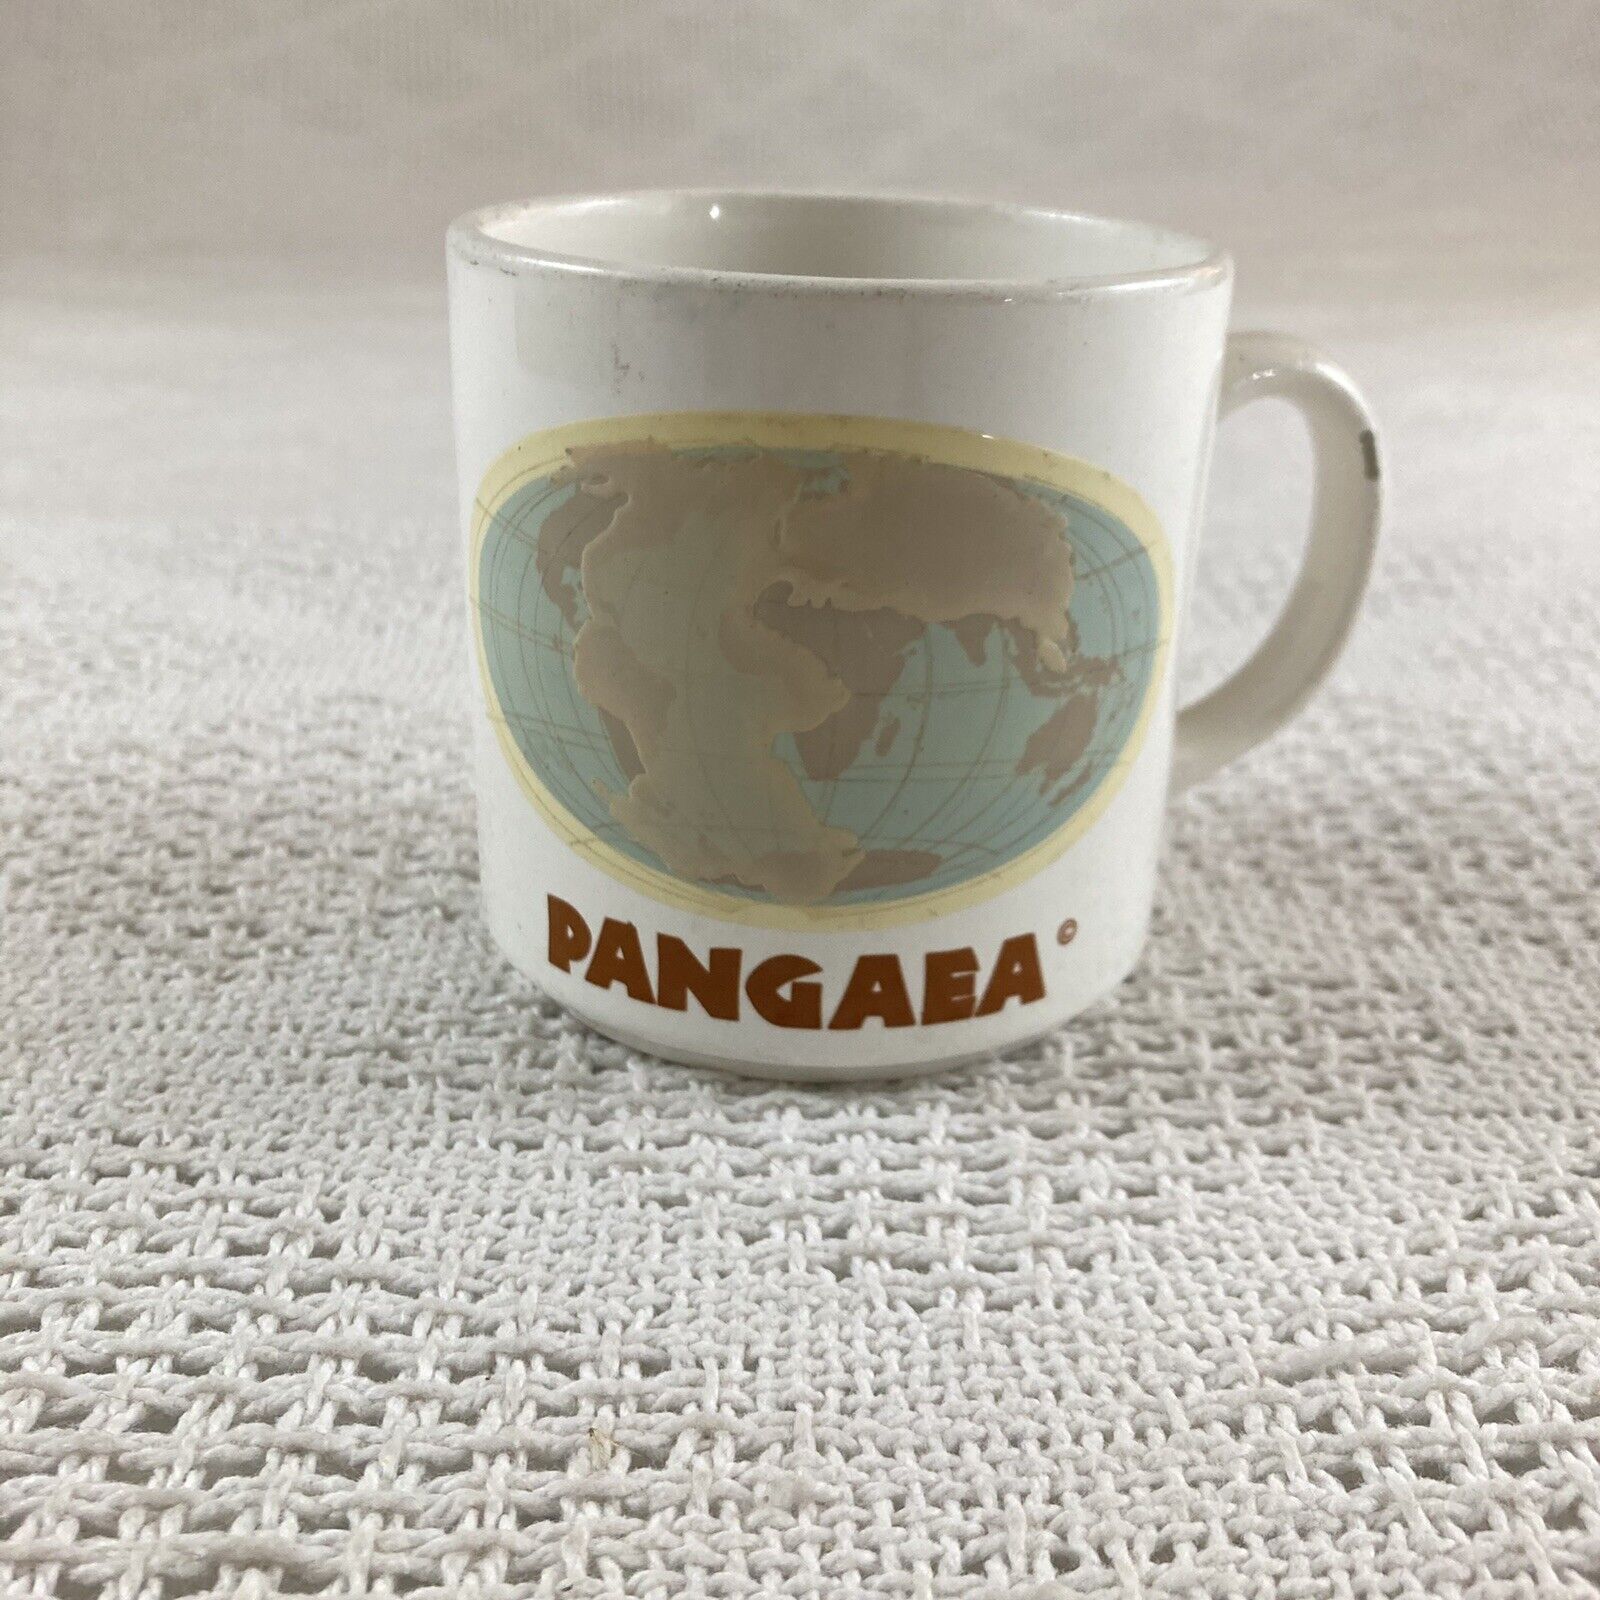 Vintage 1988 Magic Coffee Mug - Pangaea - Science News Nerds Science Service